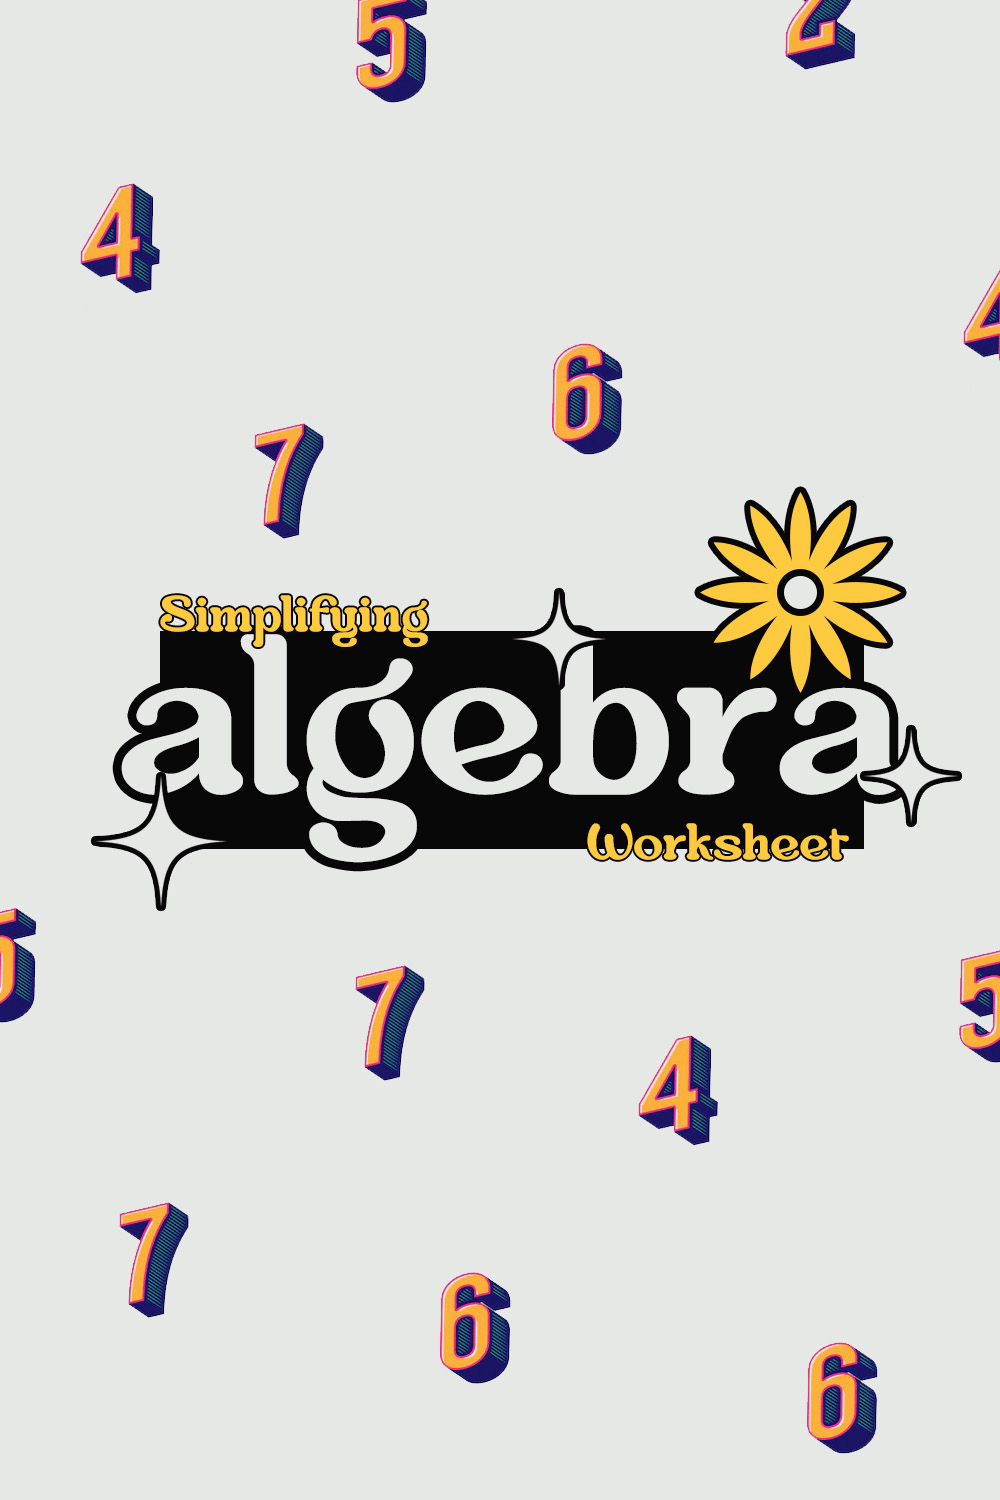 17 Images of Simplifying Algebra Worksheets